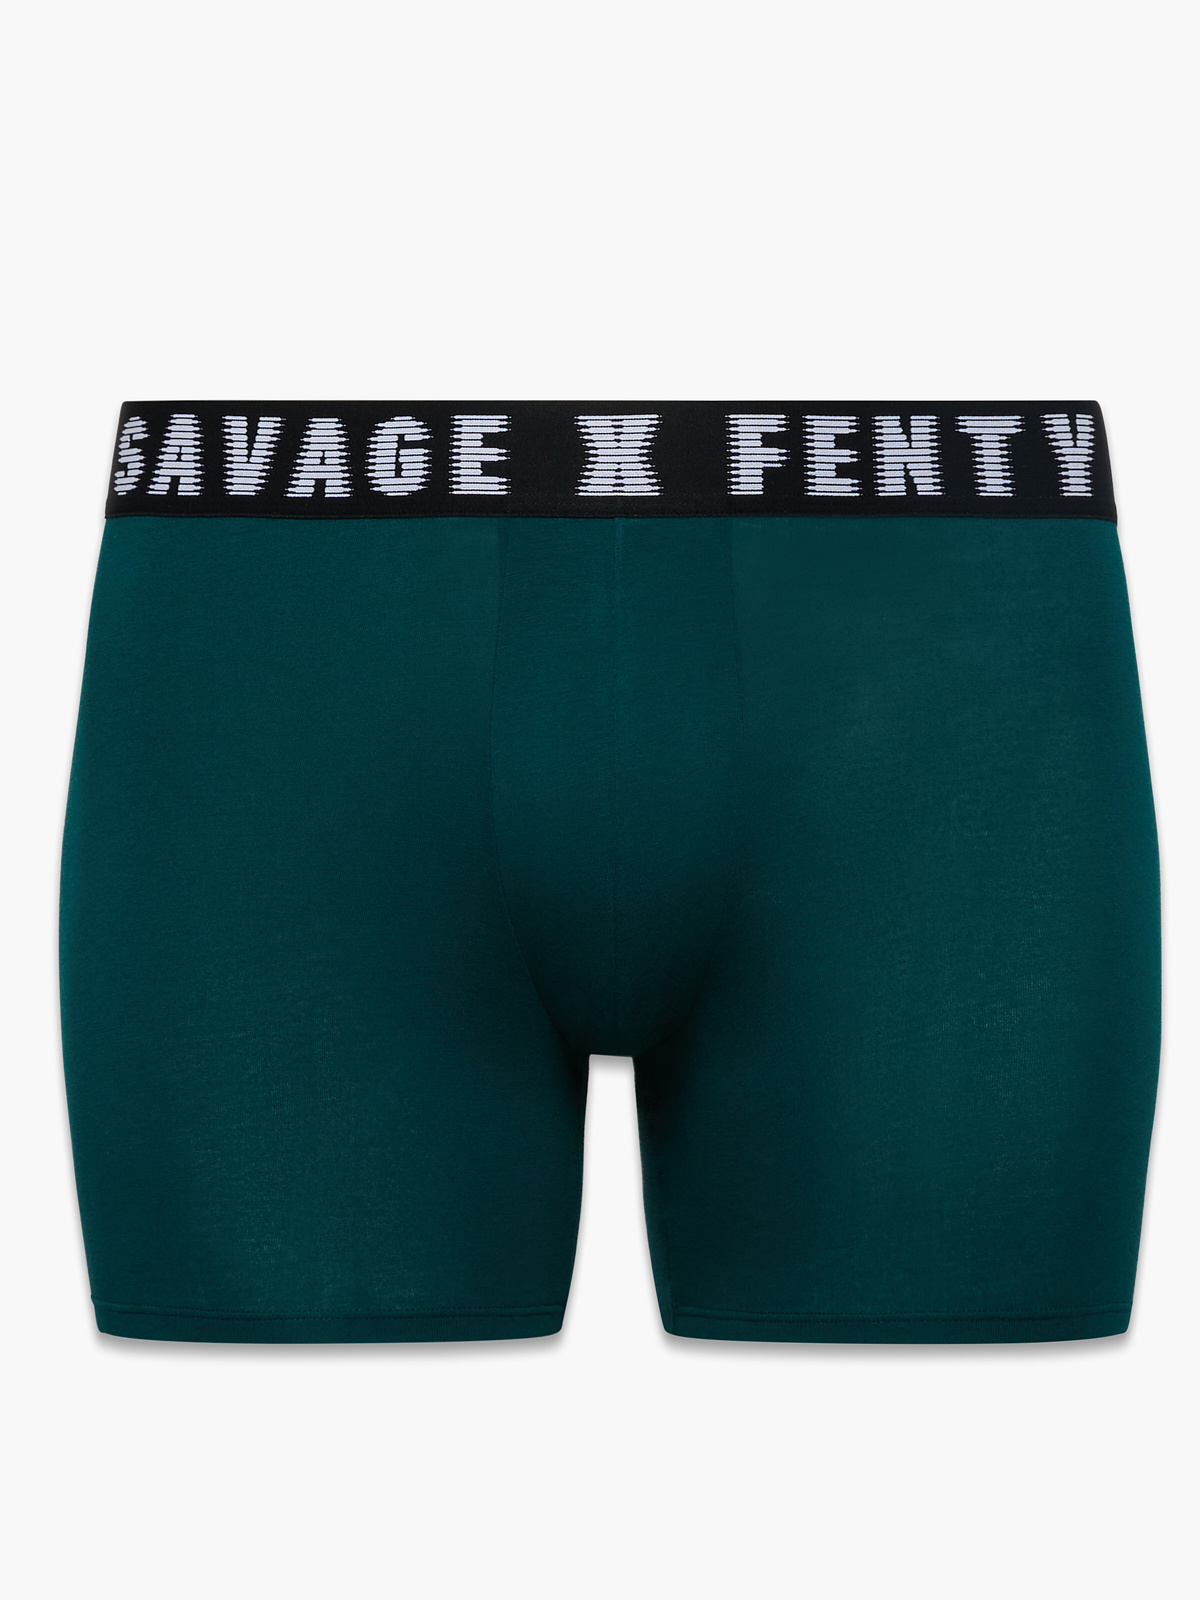 Savage X Boxer Briefs in Green | SAVAGE X FENTY Germany